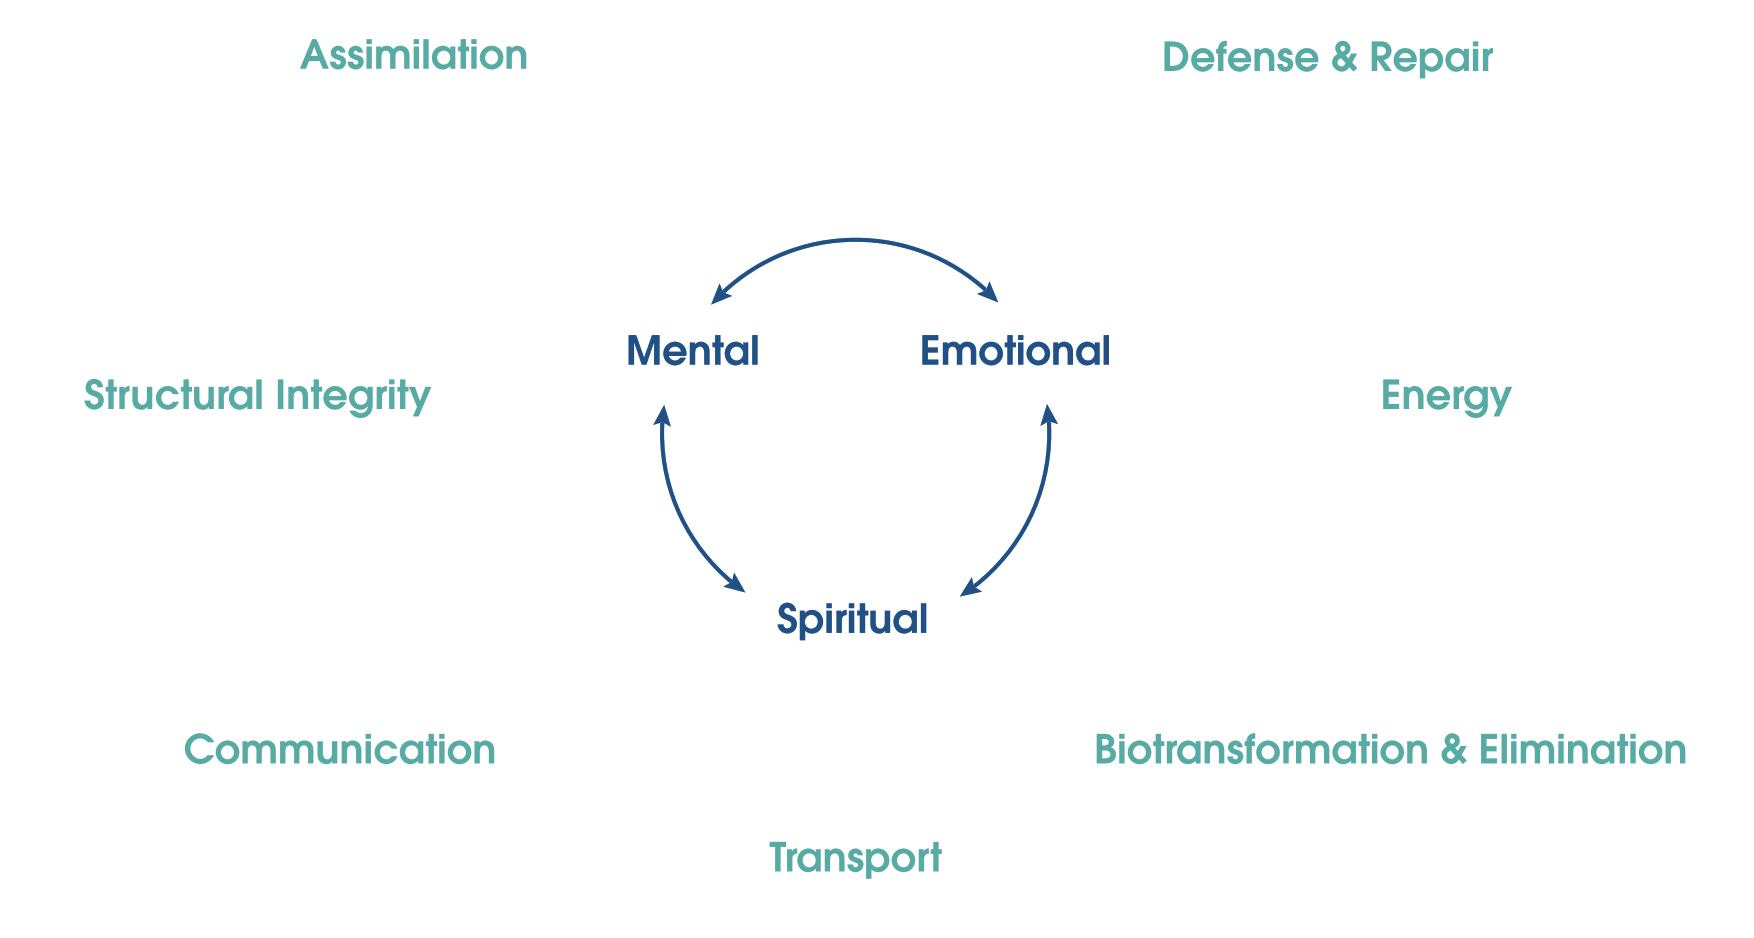 Modalities for healing -- Mental, Emotional, and Spiritual